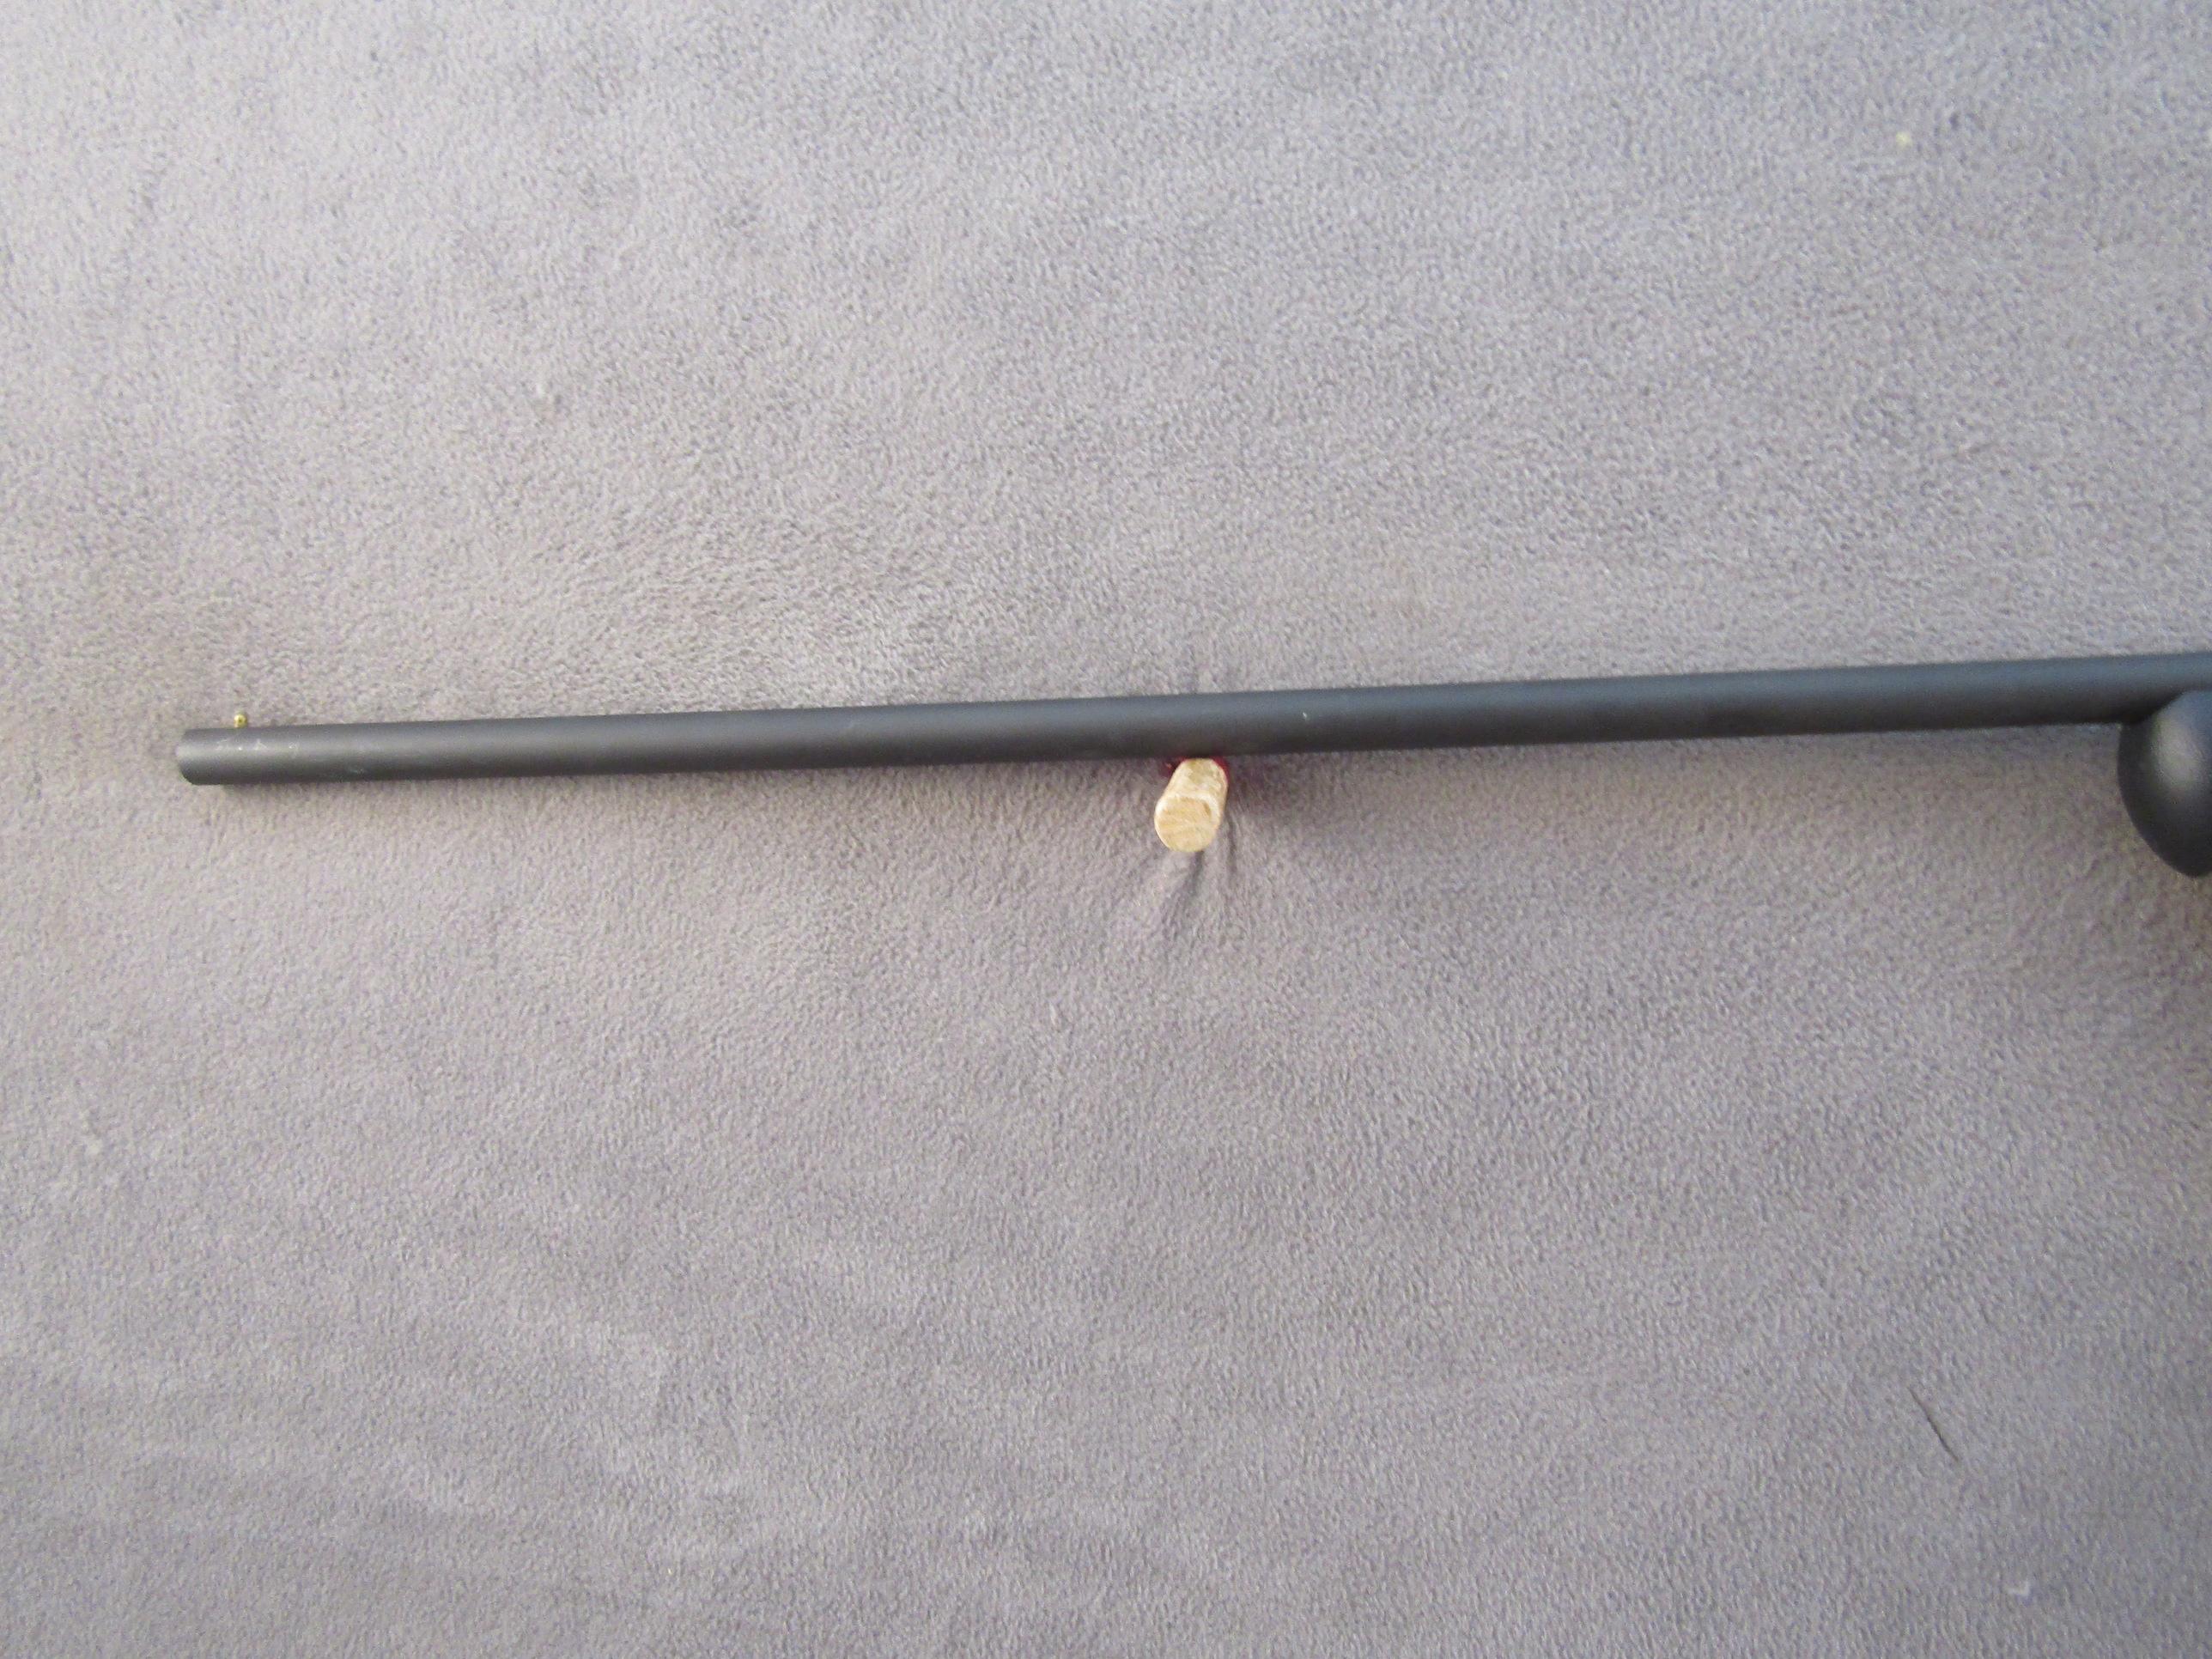 ROSSI Model Unknown, Breech-Action Shotgun, 12g, S#7CS040795L